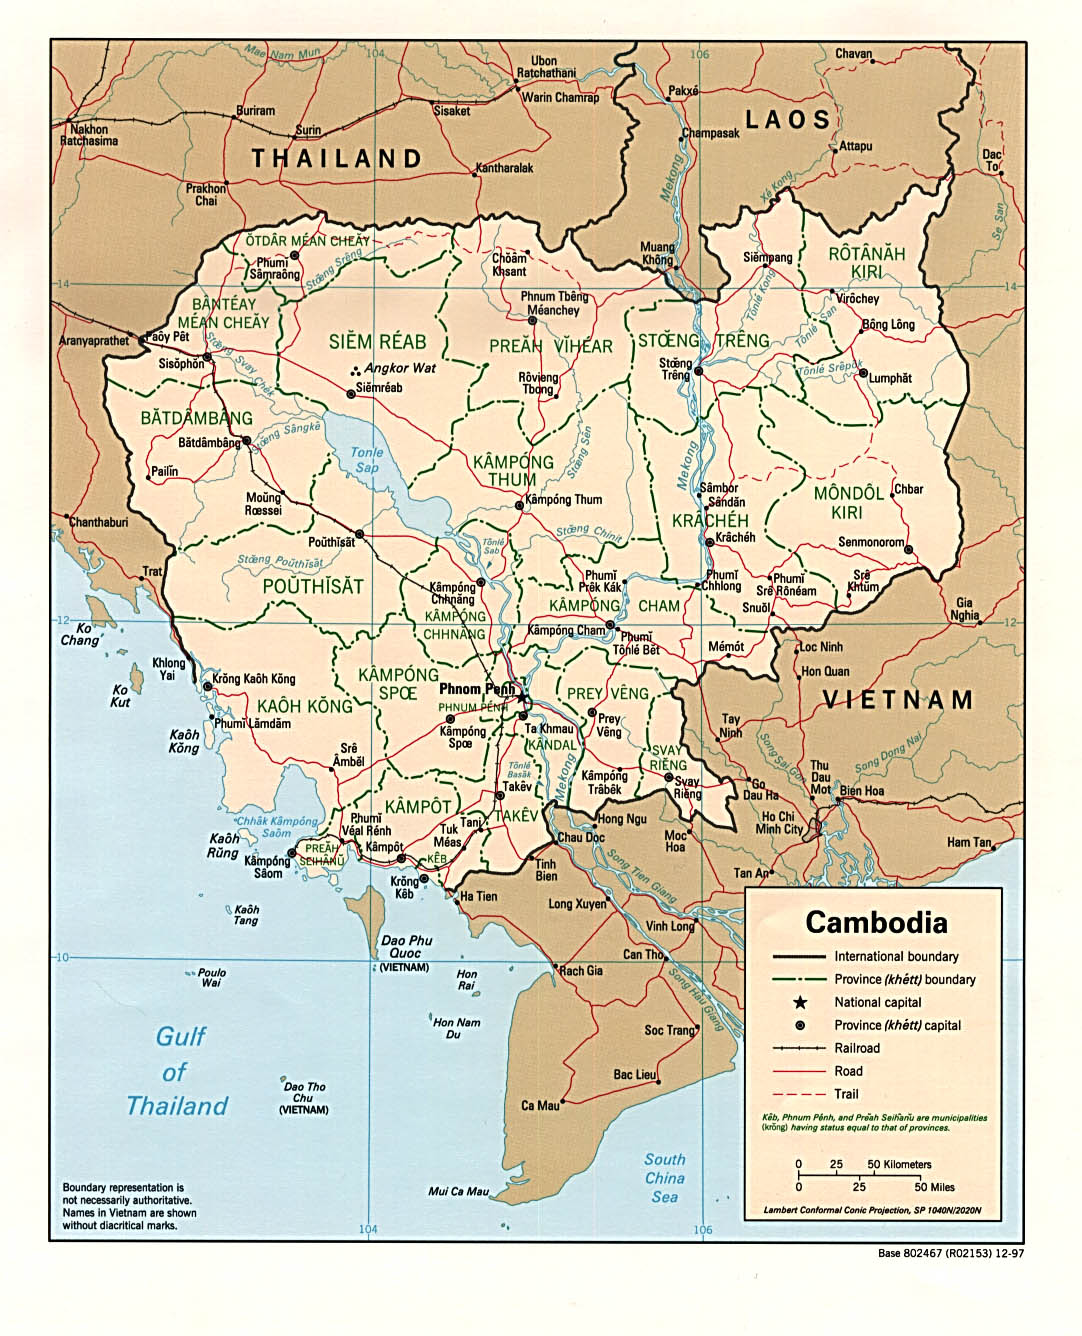 Map Of Cambodia Cambodia [Political Map] 1997 (323K) 